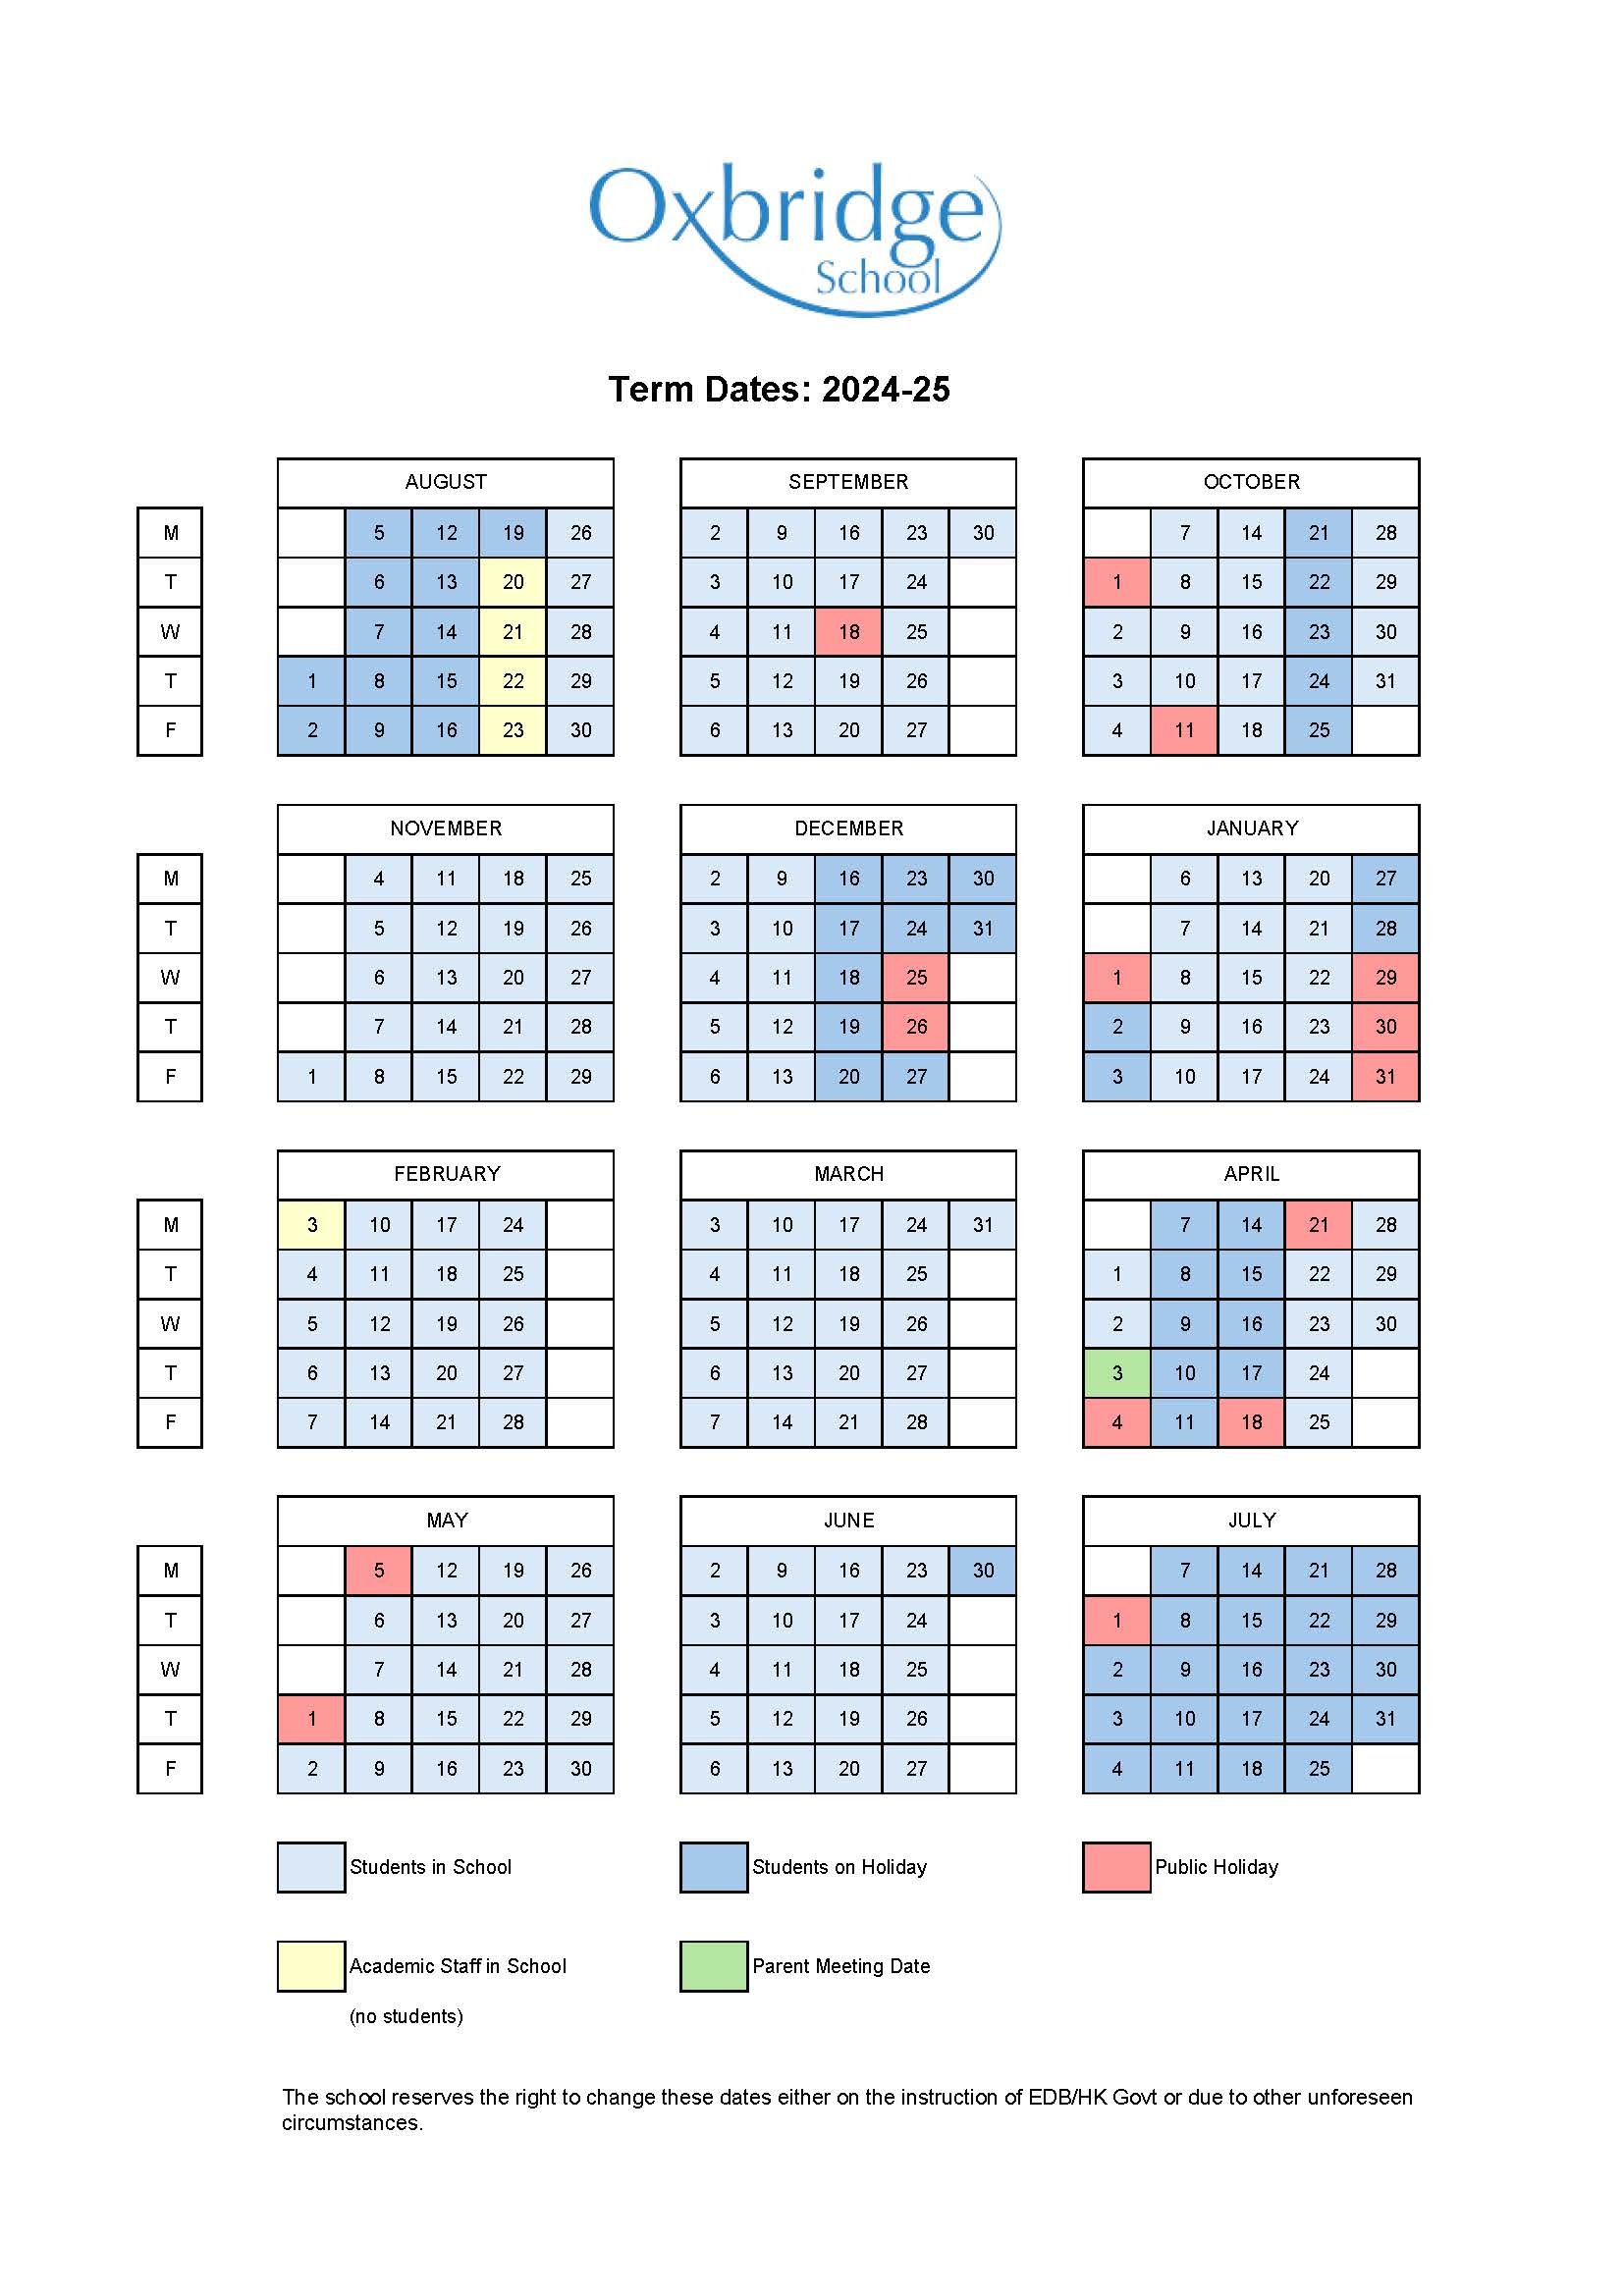 official-oxbridge-term-dates-2024-25-(1)